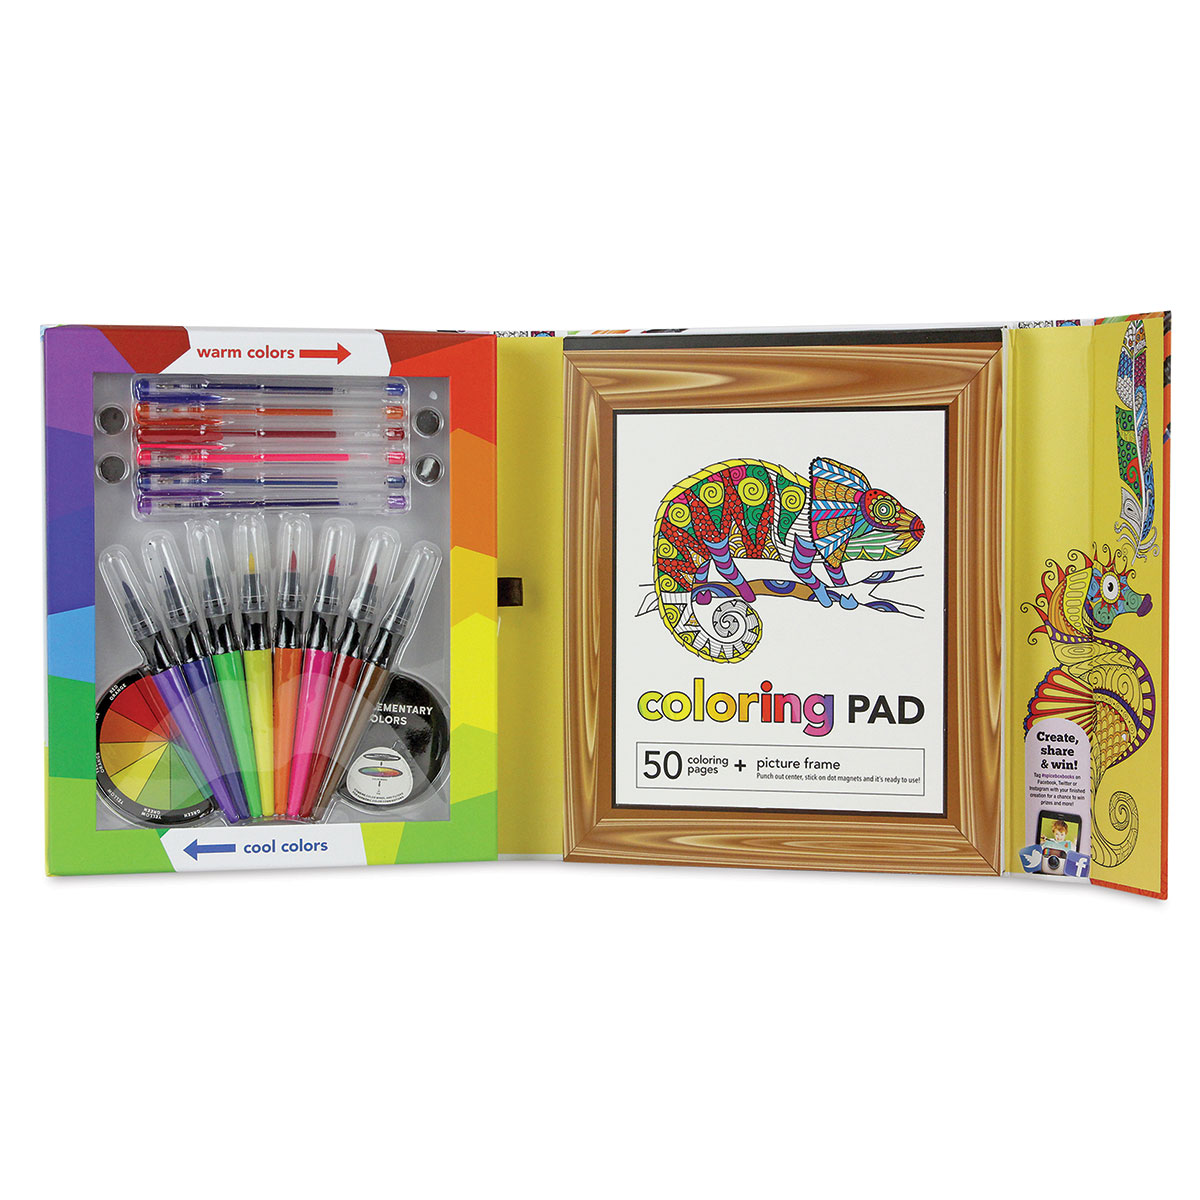 SpiceBox Creative Coloring Kit